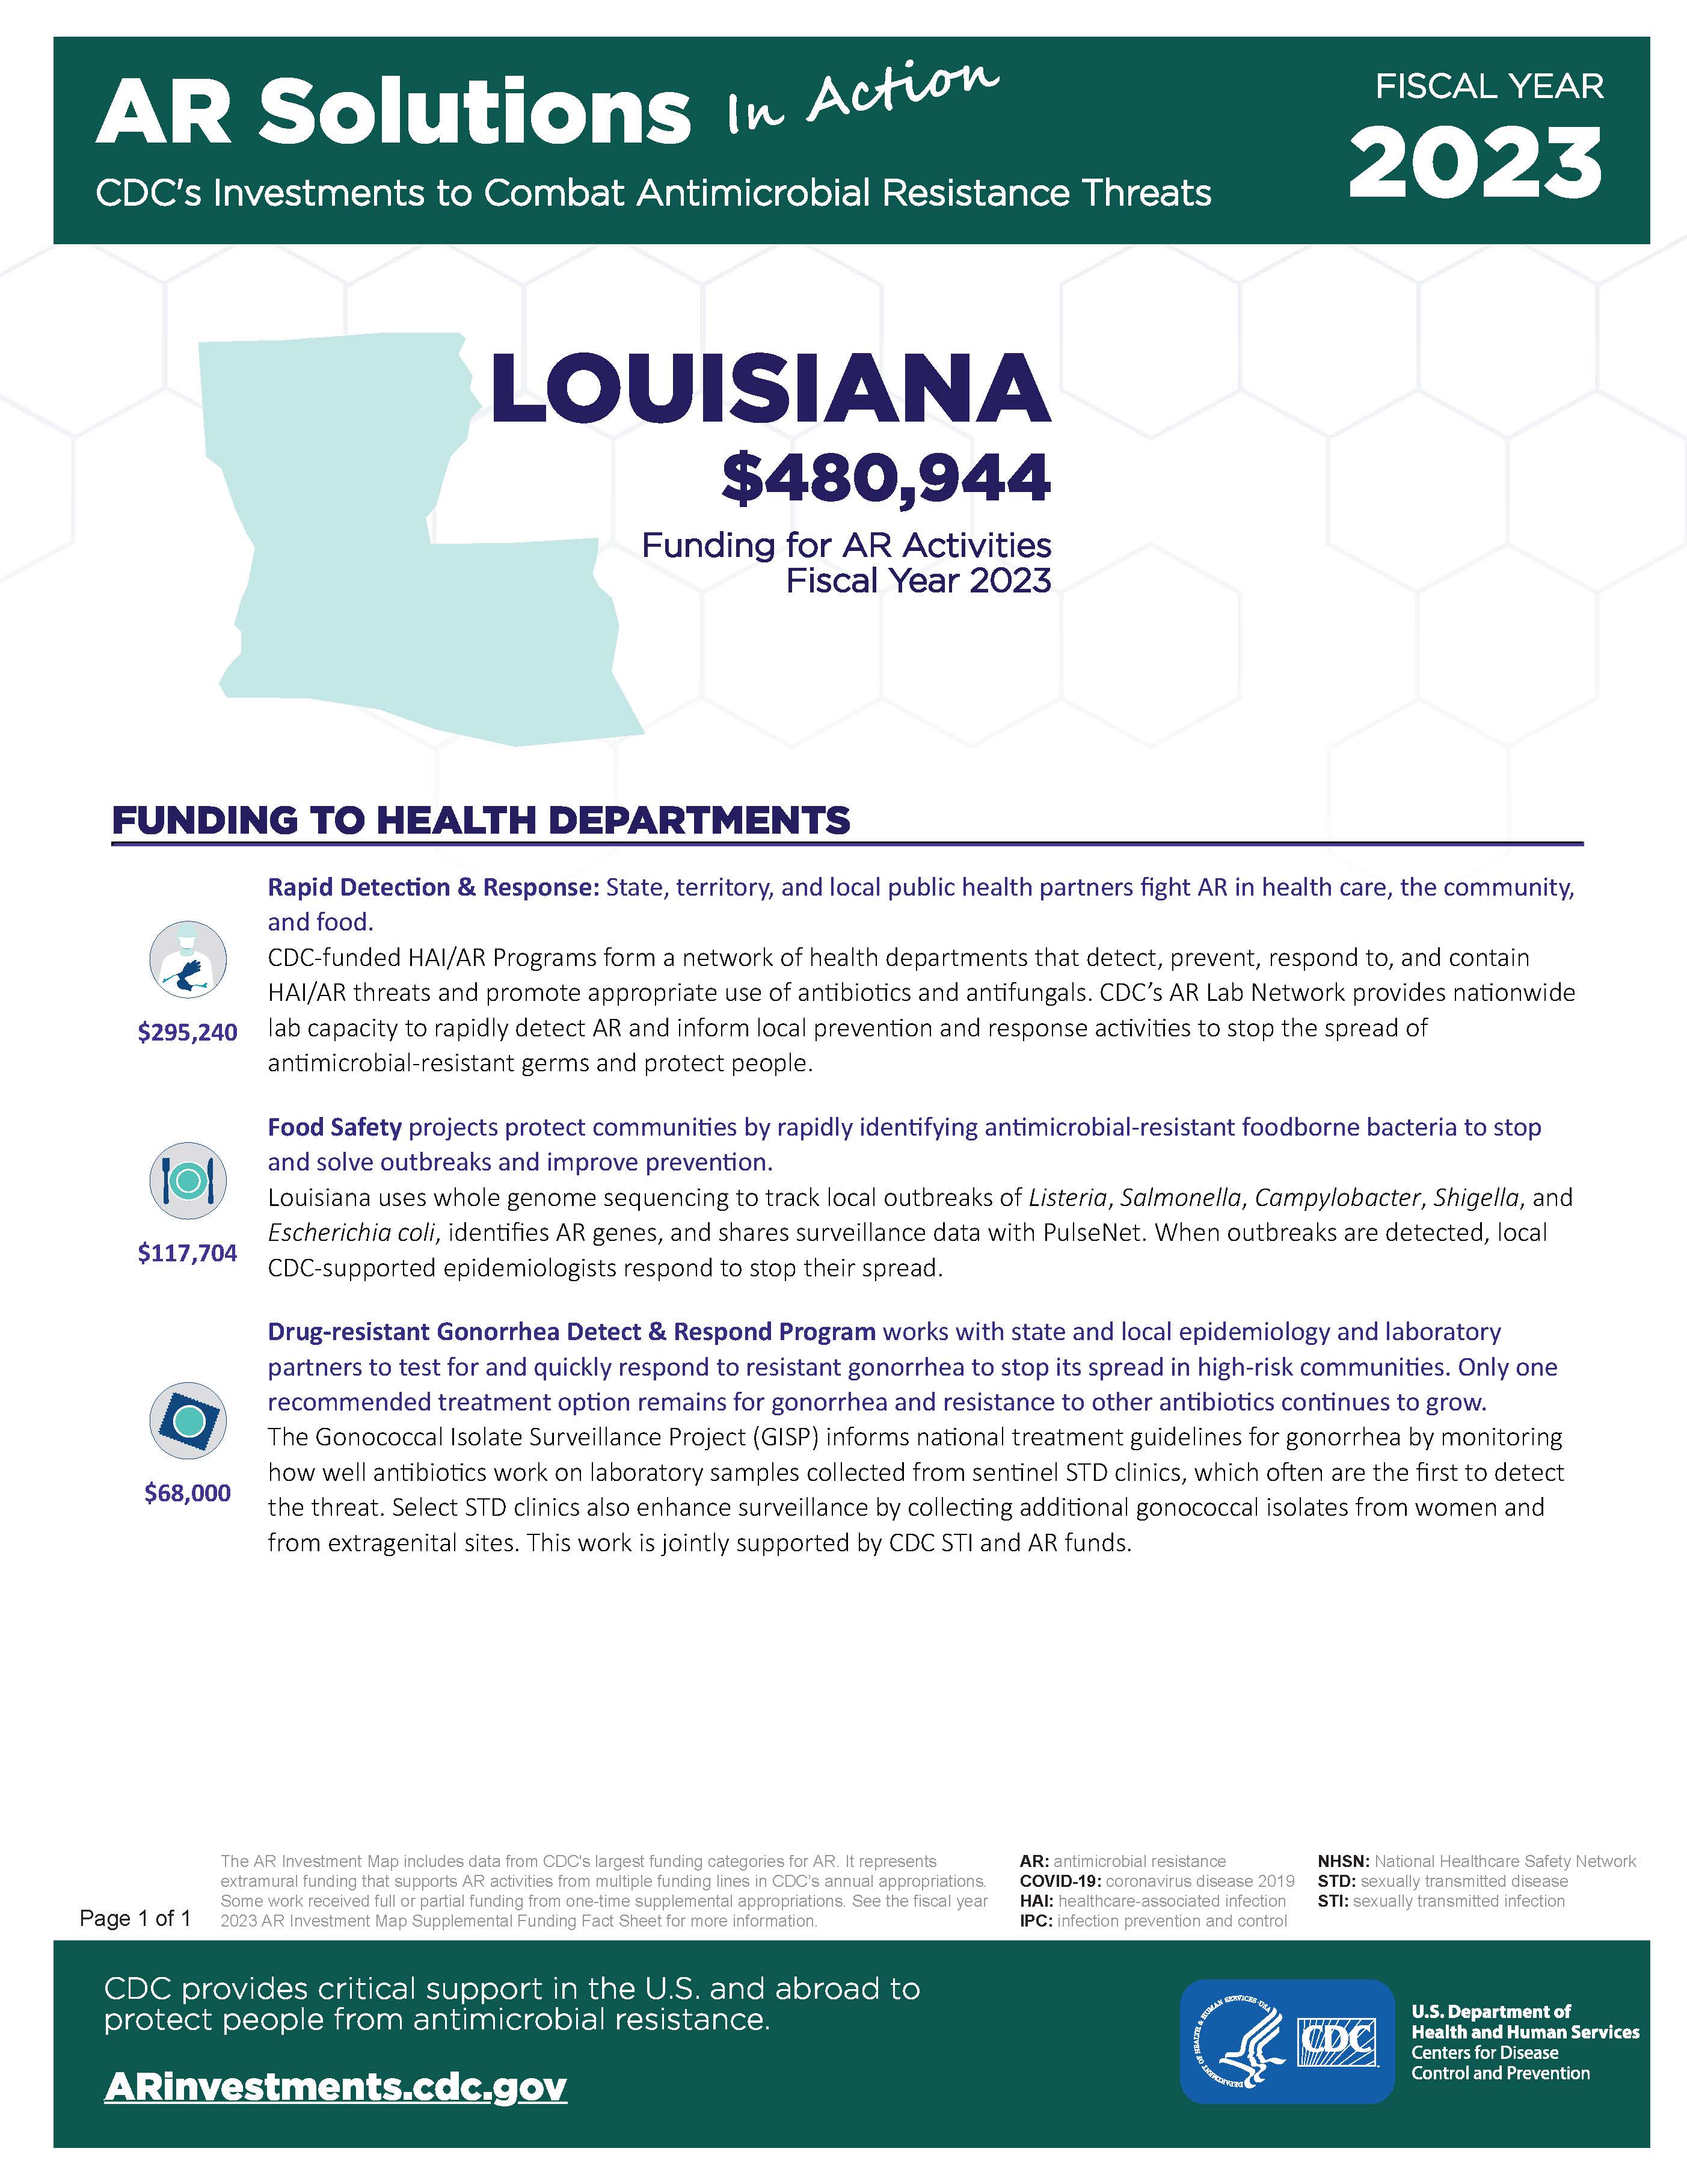 View Factsheet for Louisiana